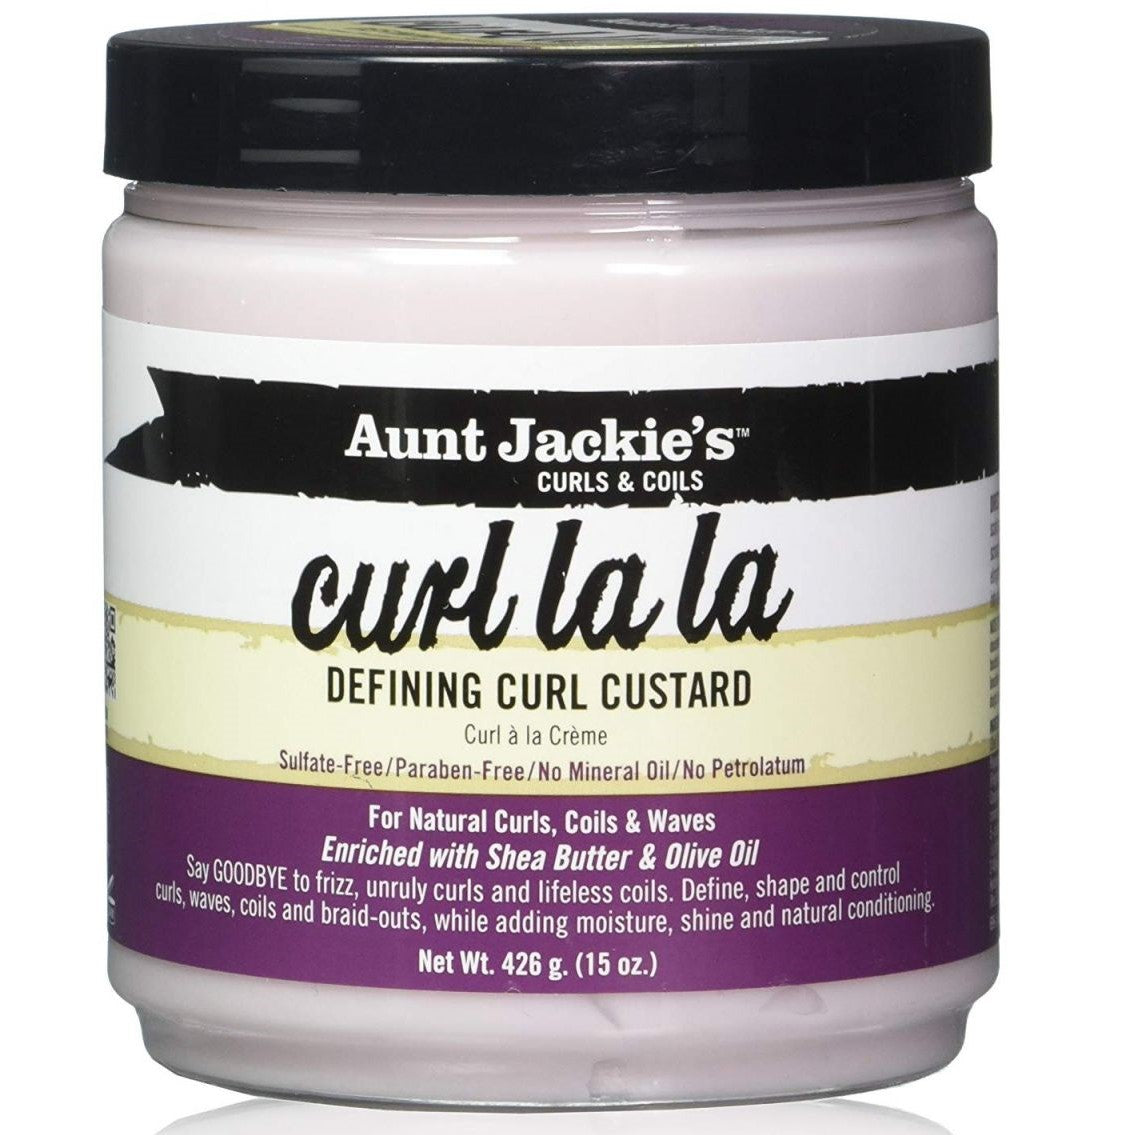 AUNT JACKIE'S CURLS & COILS CURL LA LA Defining Curl Custard 425gr - Create Magic Curls!